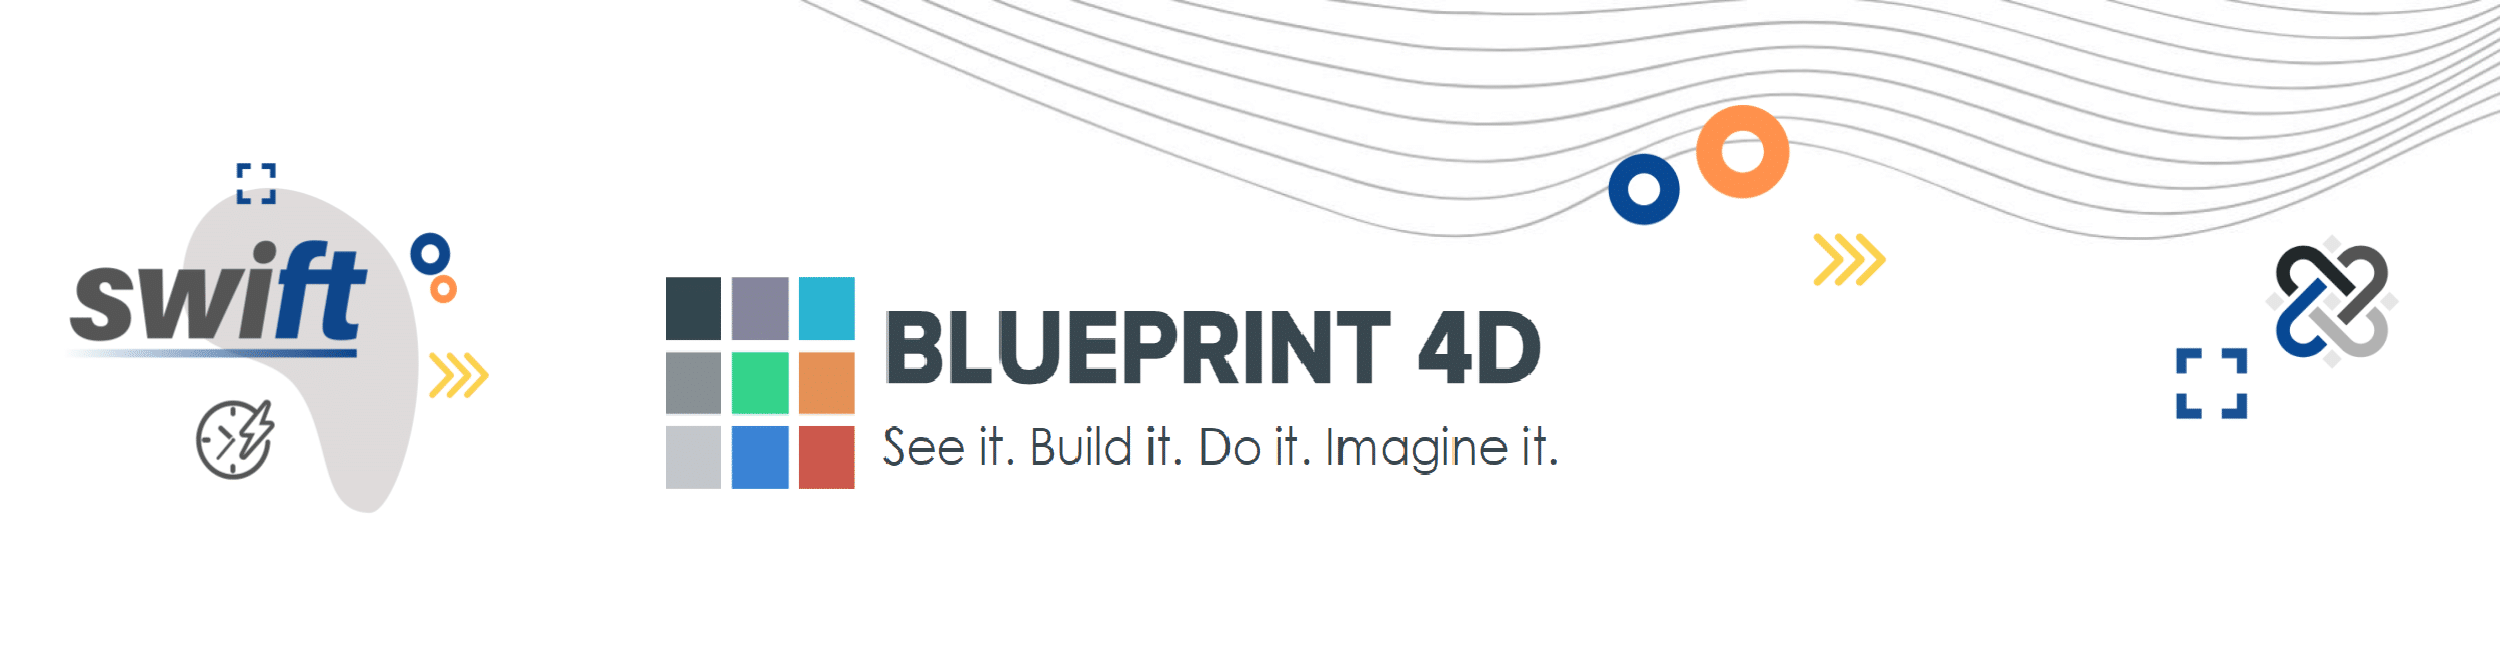 Blue Print 4D